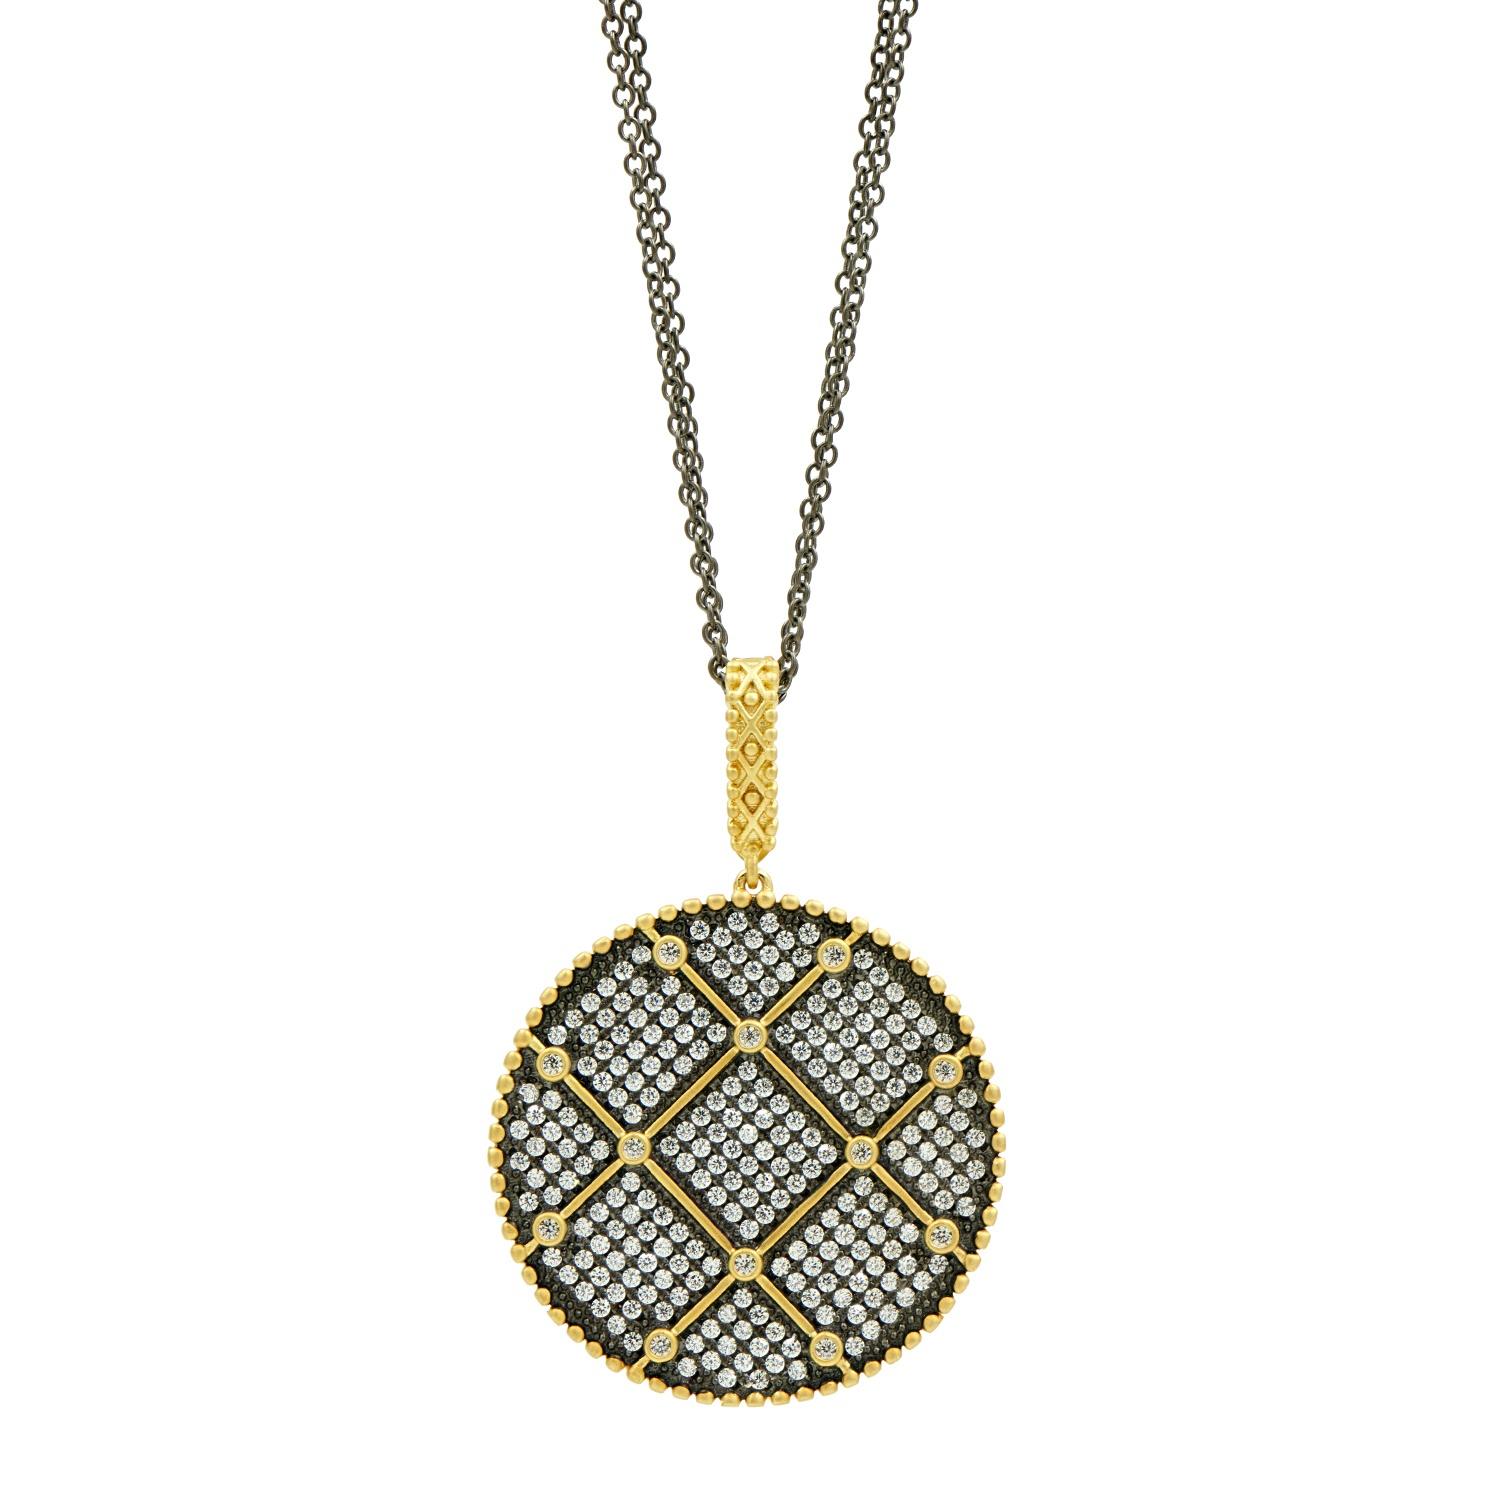 Freida Rothman Black and Gold Grid Large Disc Pendant Necklace